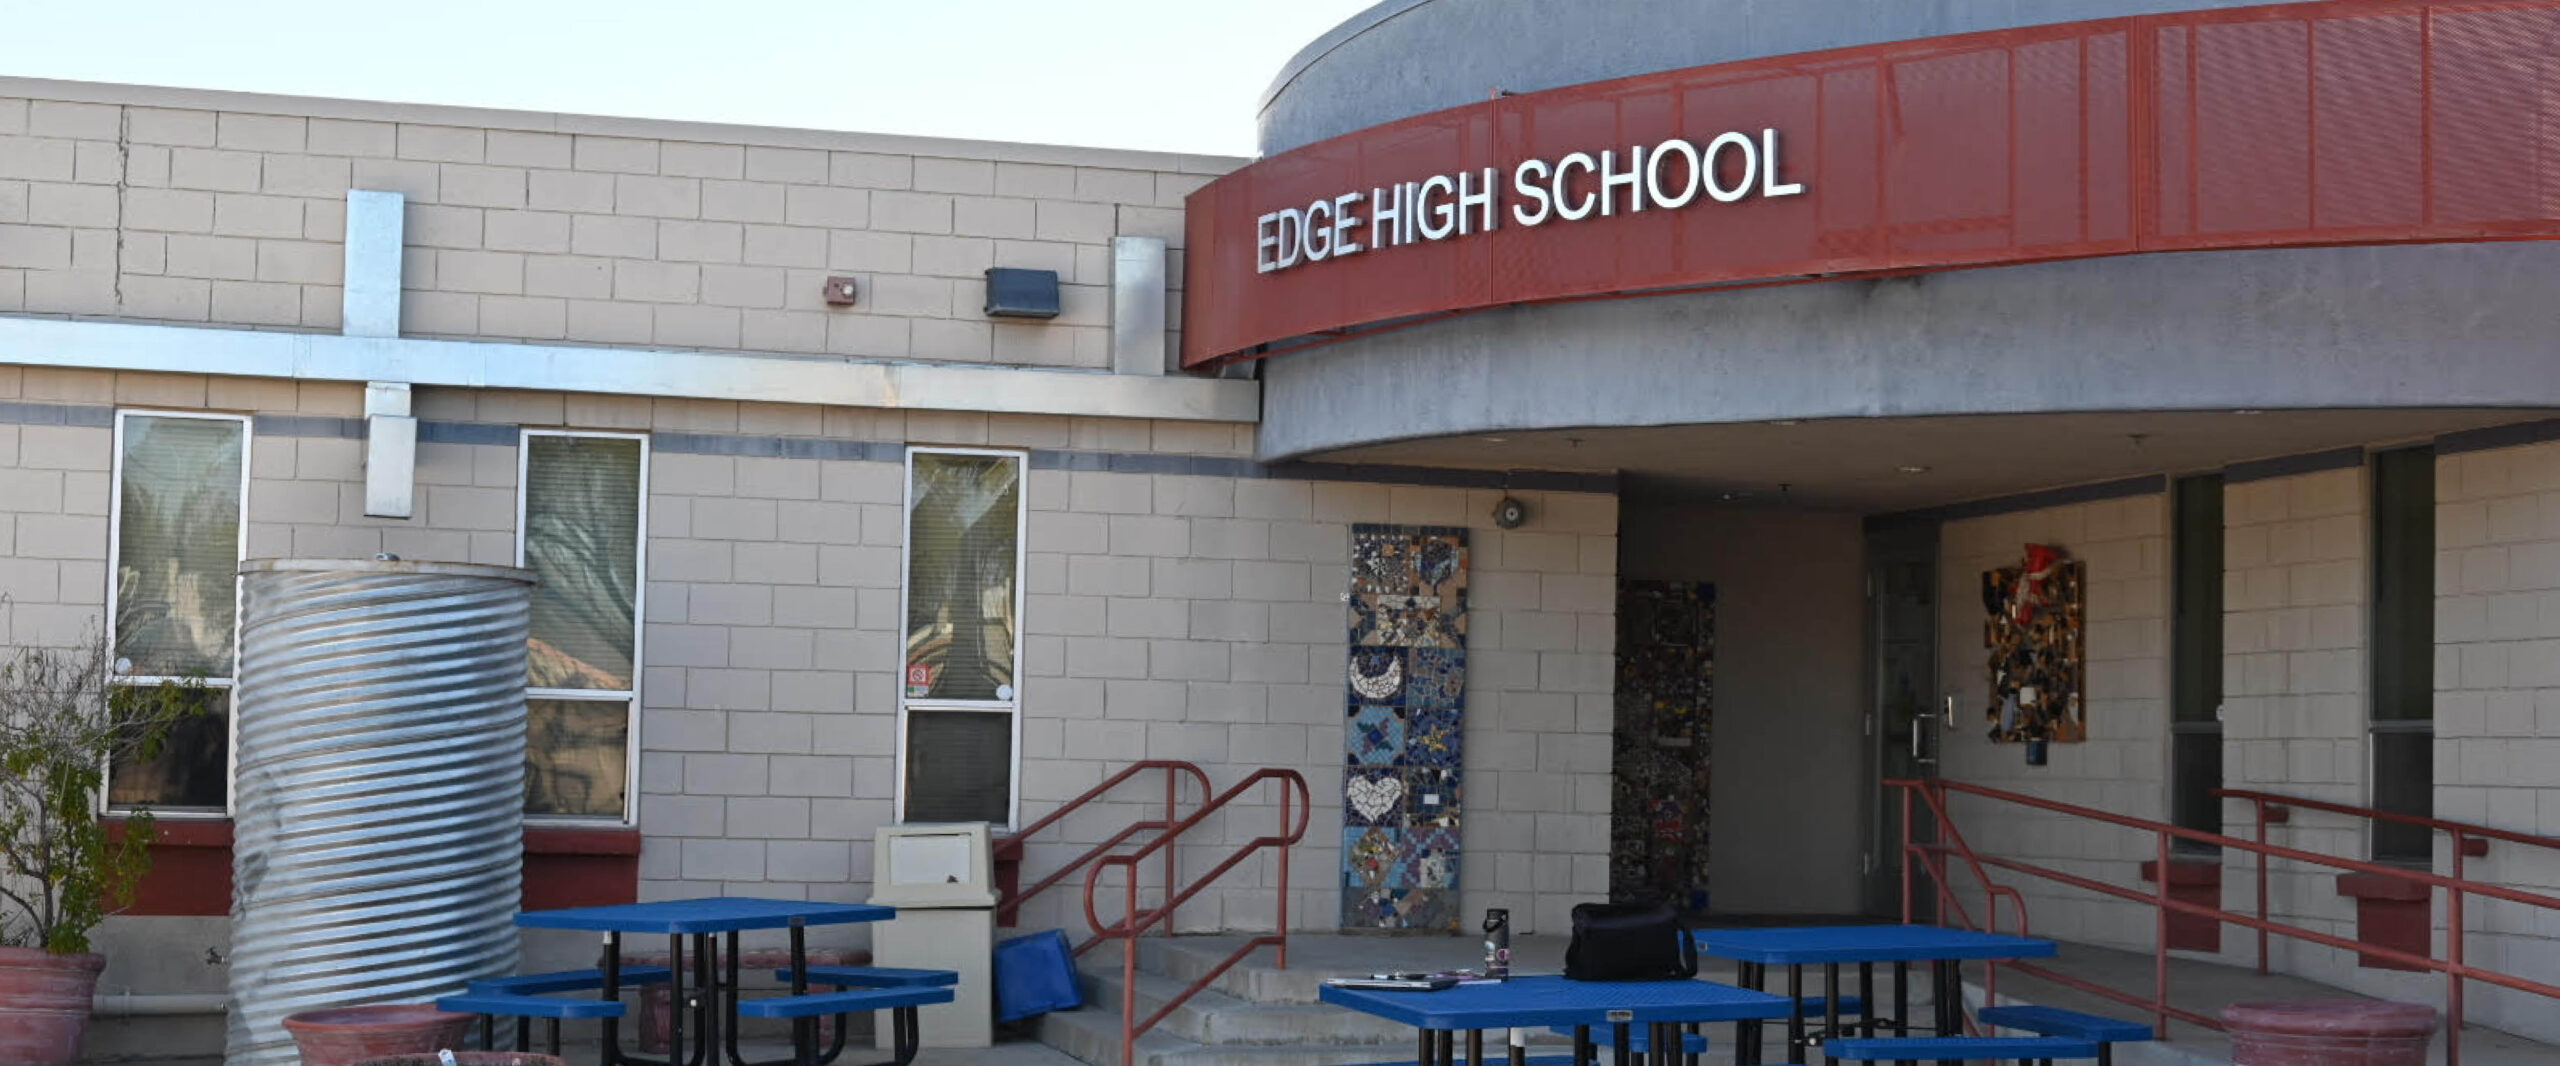 Edge High School